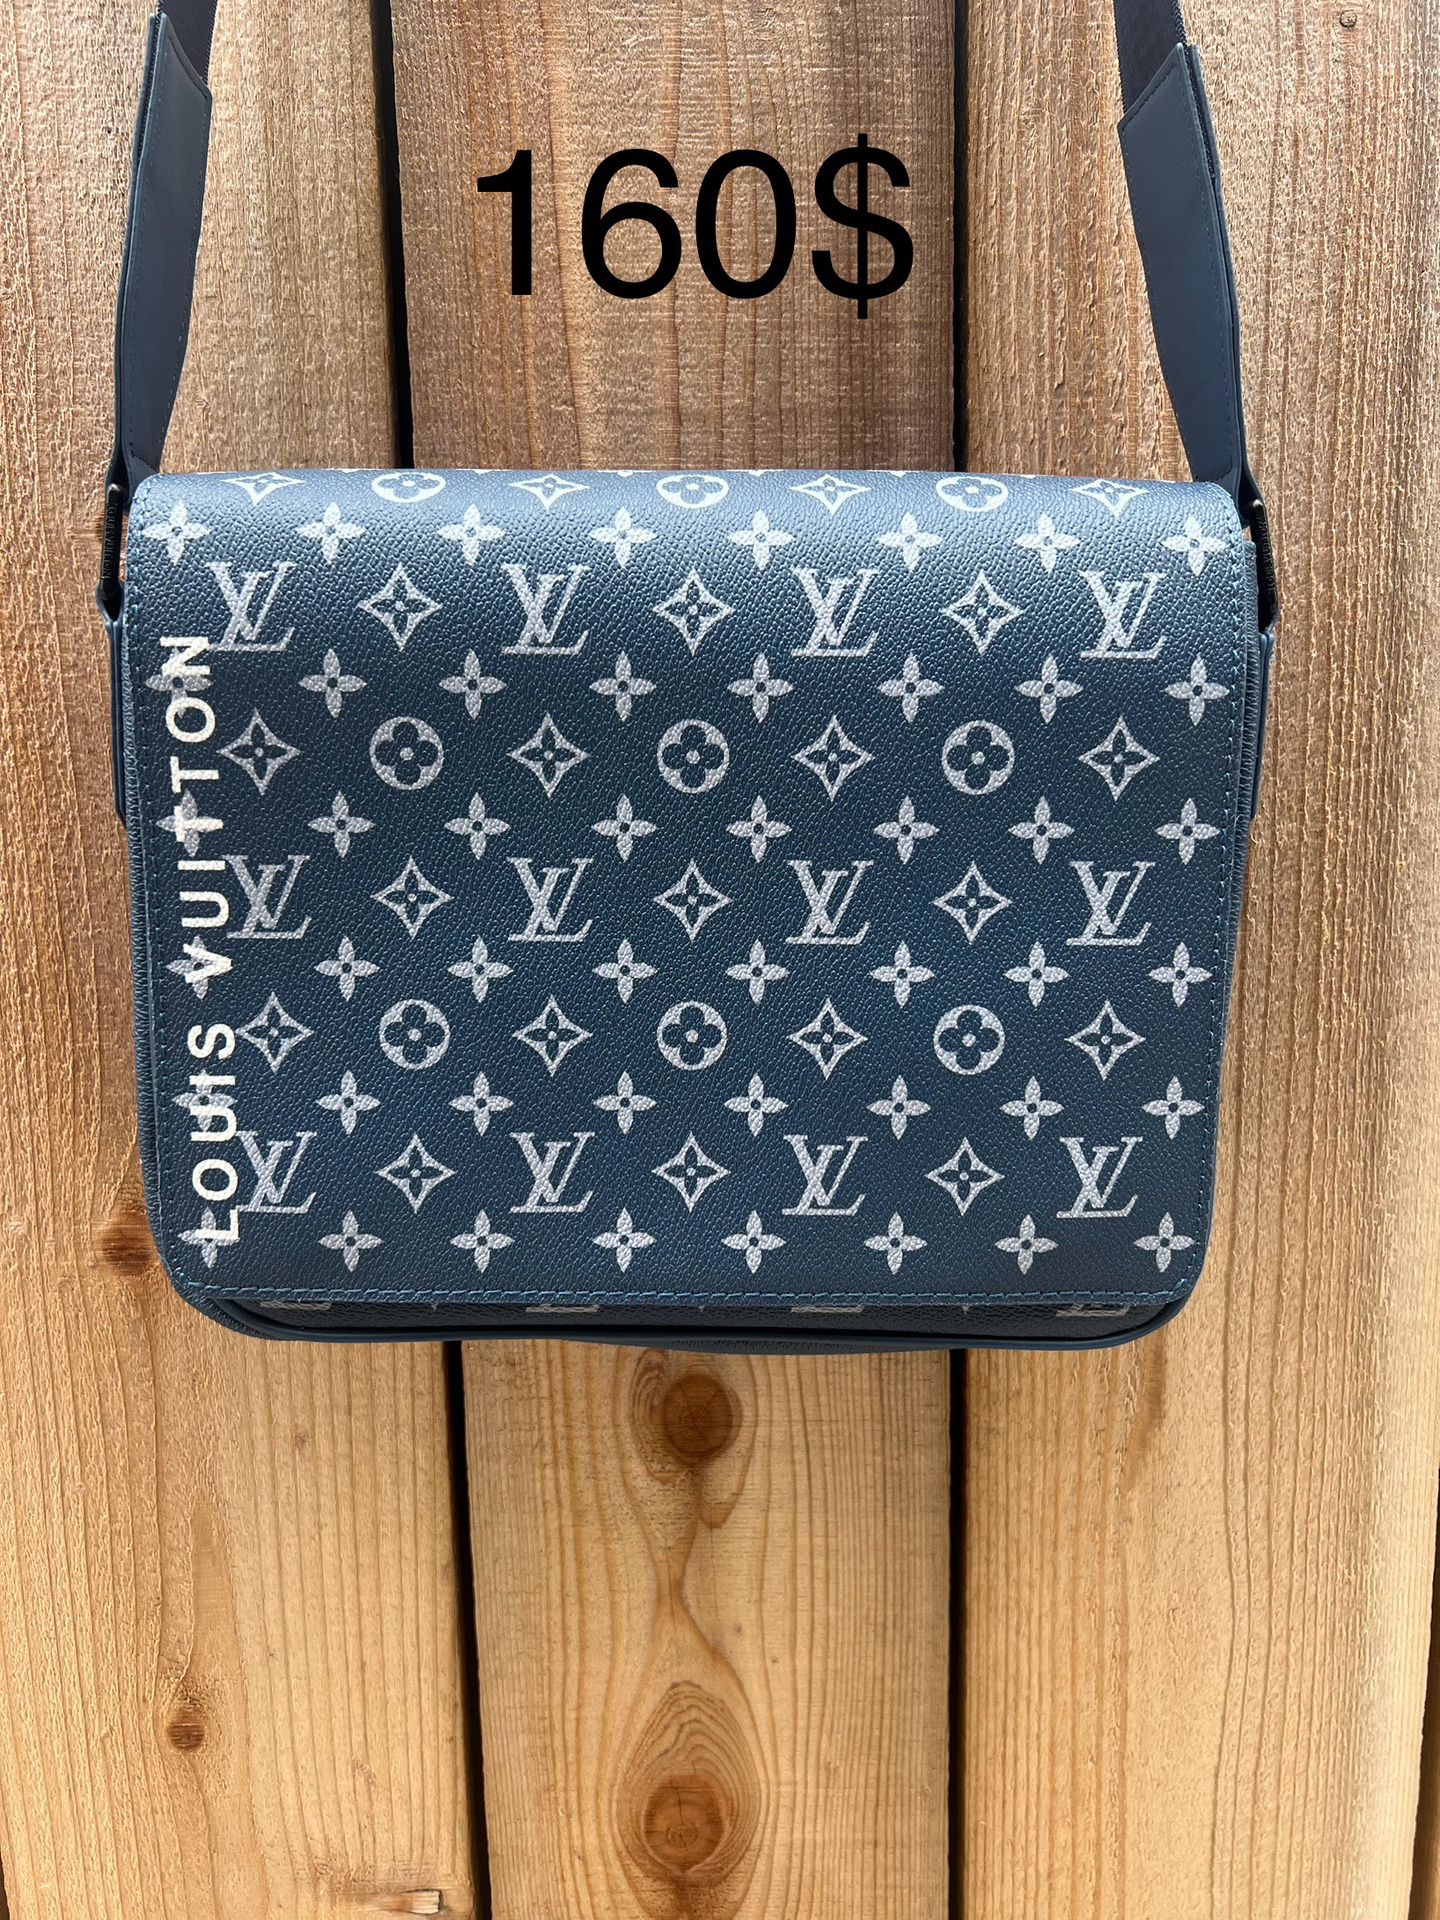 Louis Vuitton Designer Bag 